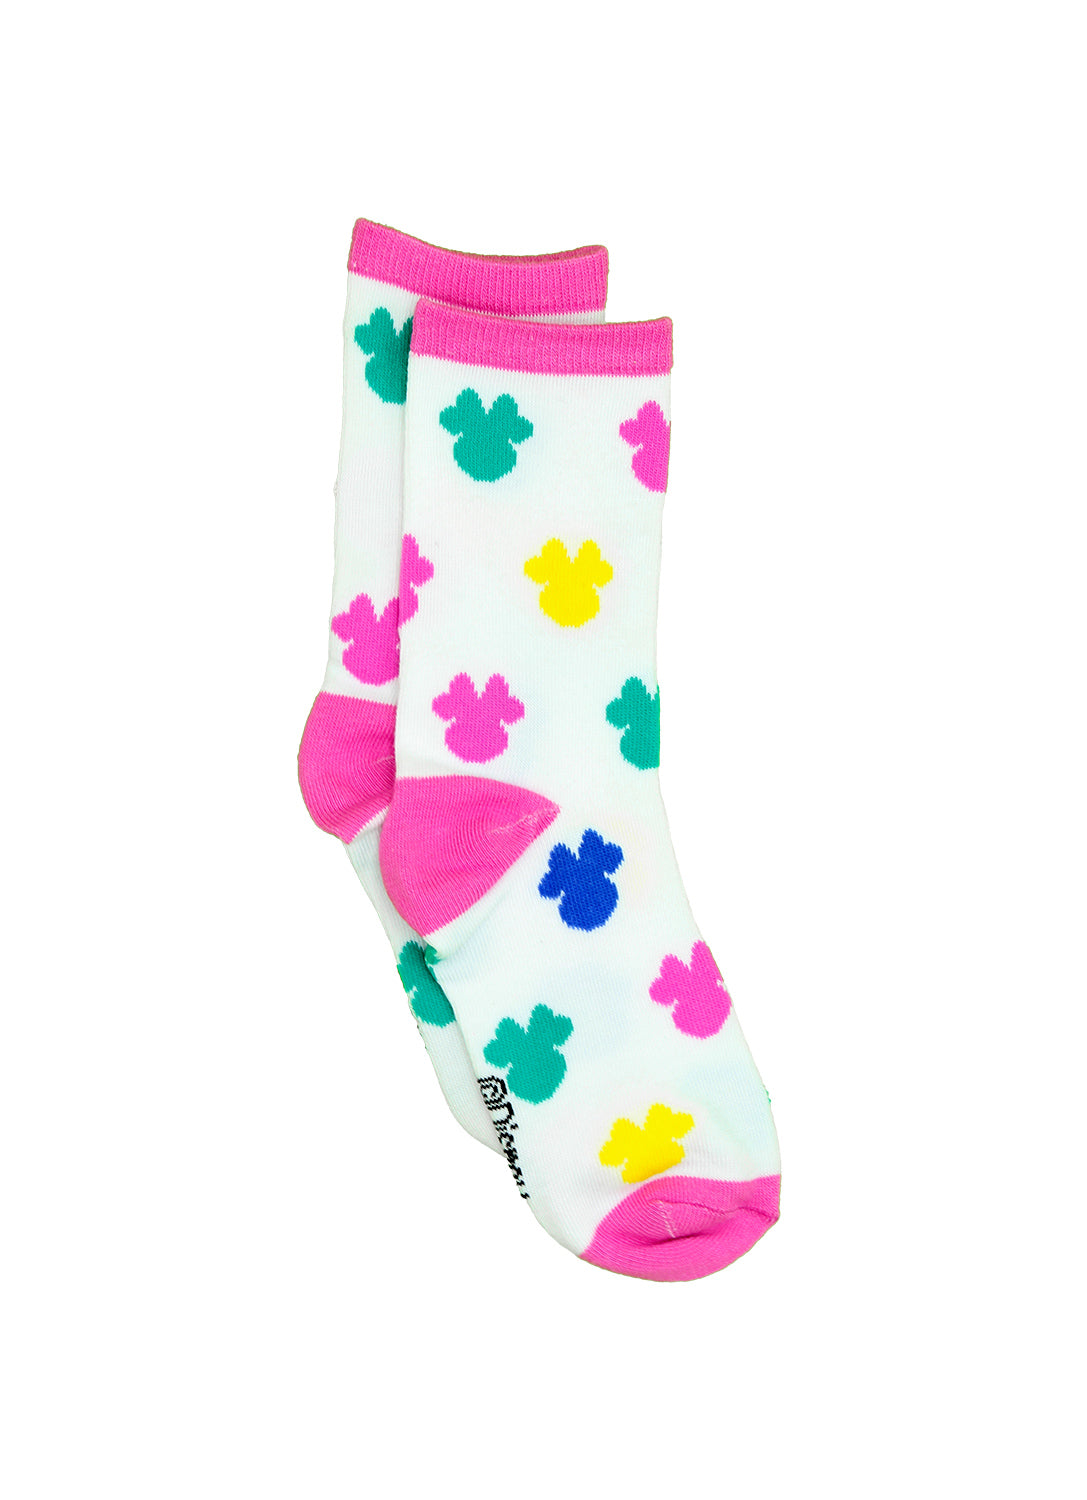 Girls Minnie Mouse Socks - Rainbow 6 Pack